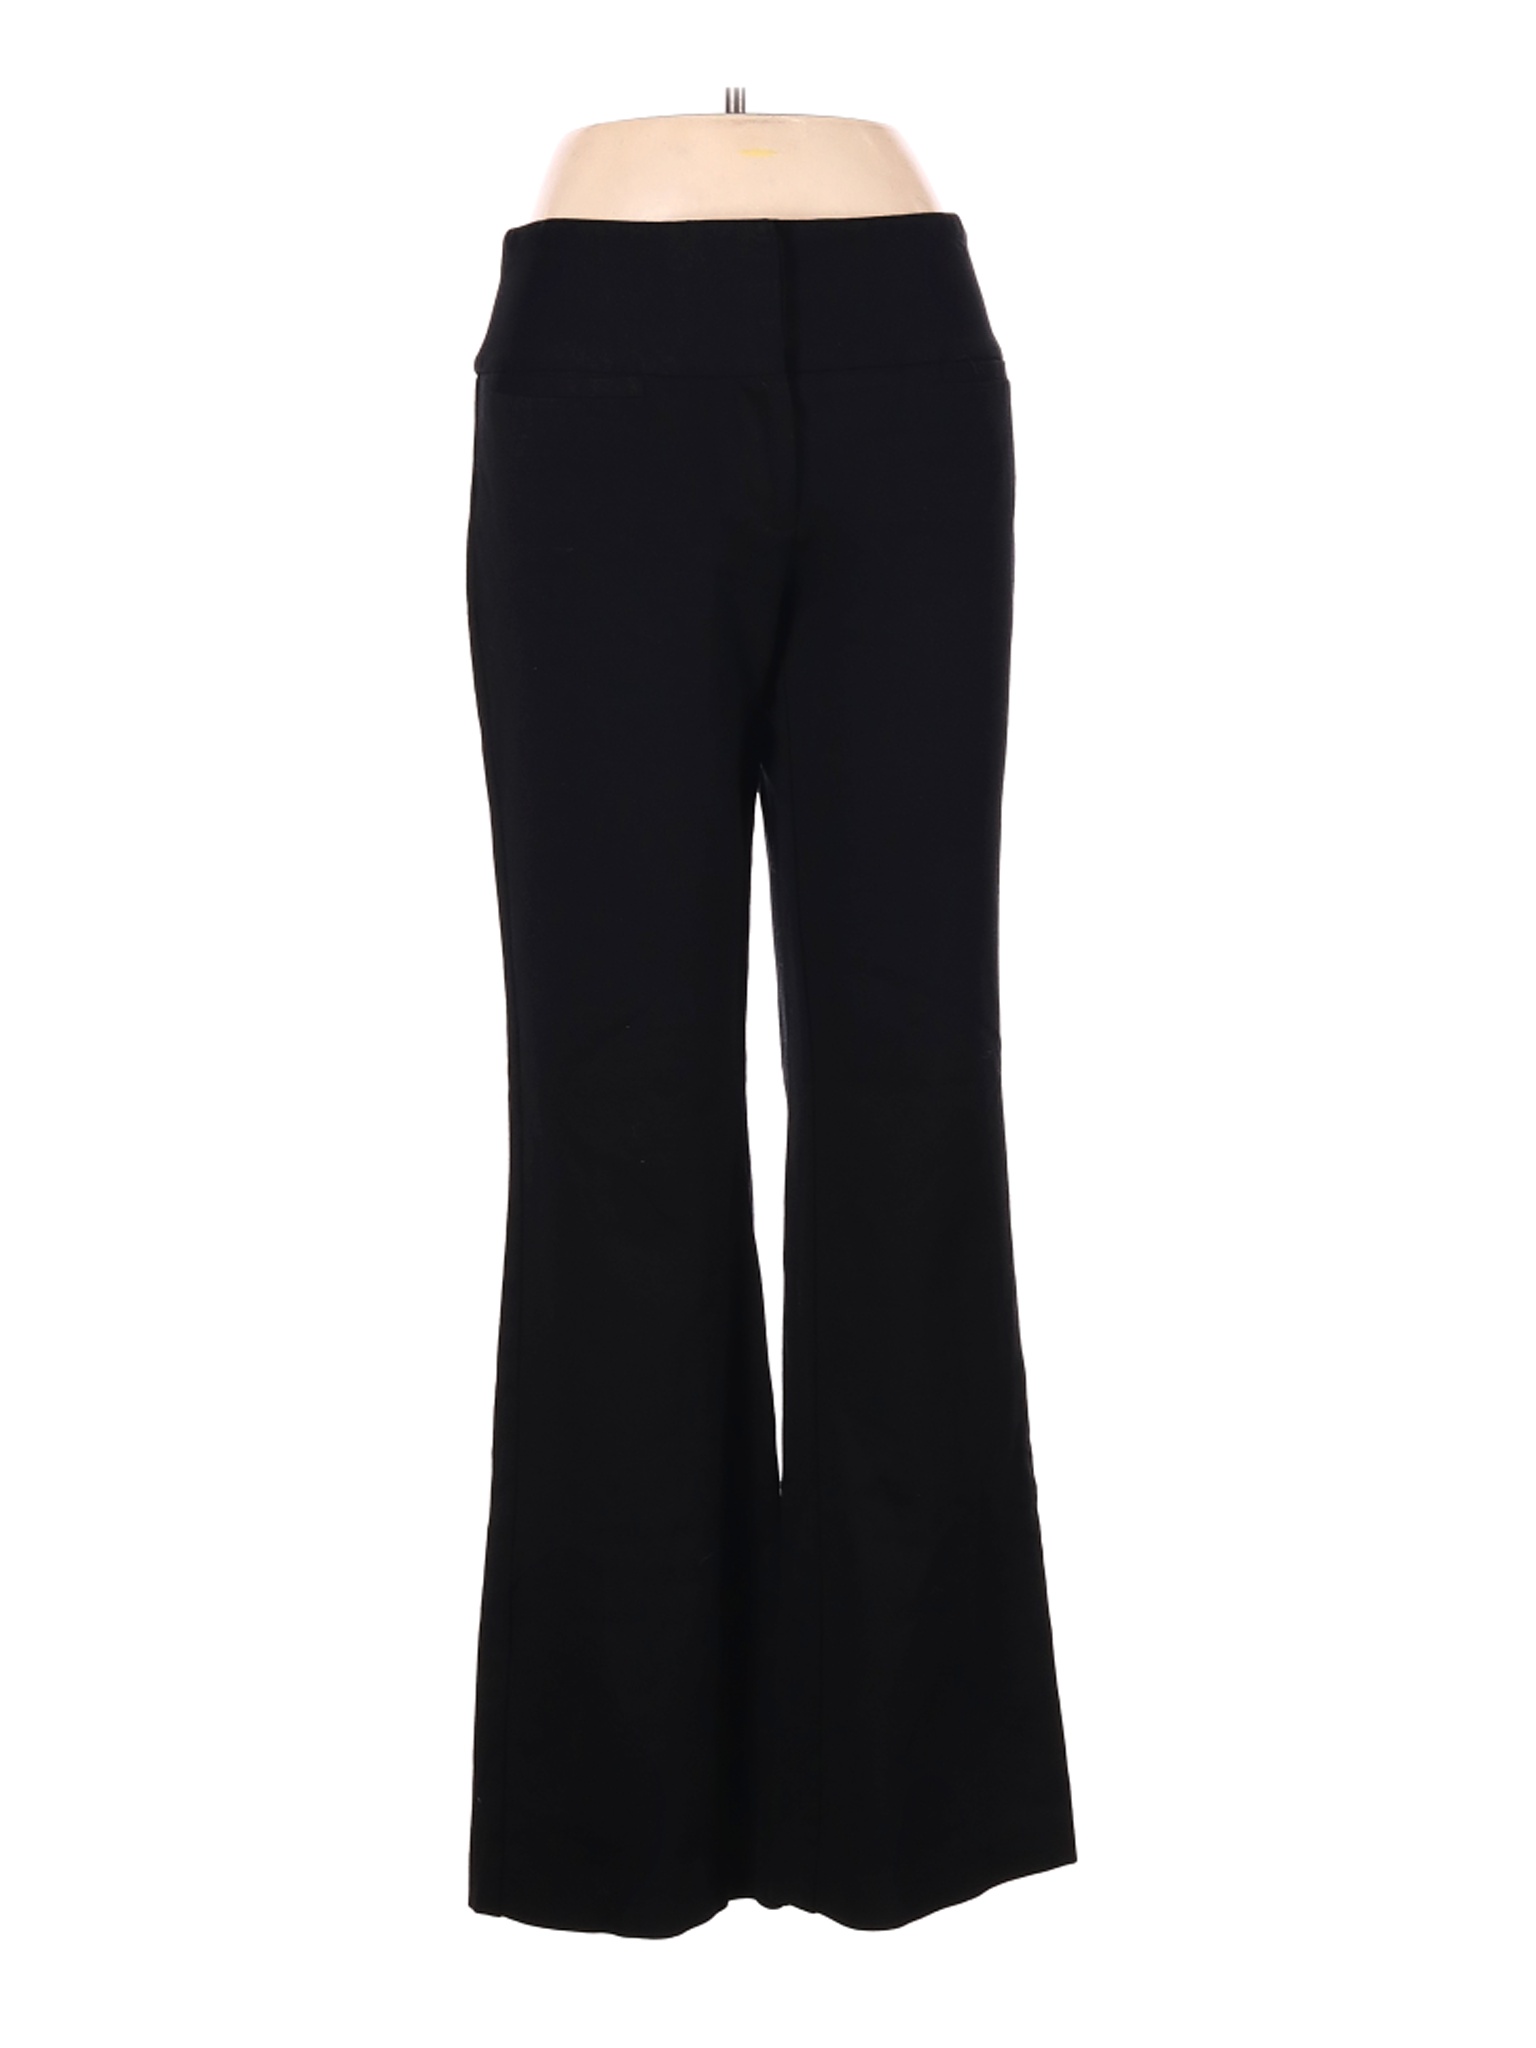 INC International Concepts Women Black Dress Pants 6 | eBay